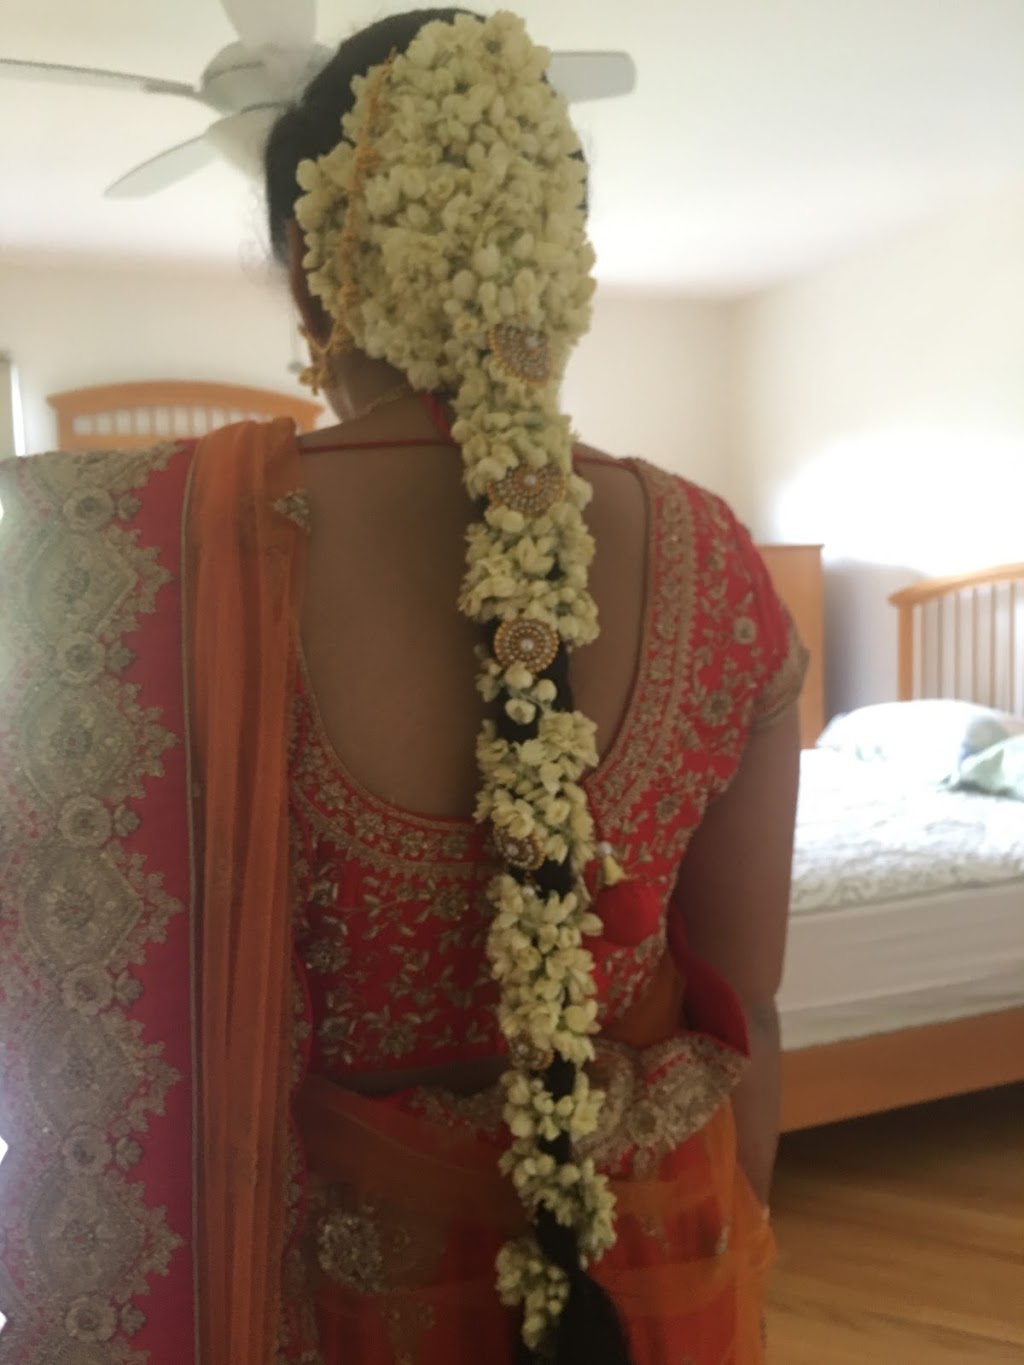 Indian bridal and beauty services | 430 Plainsboro Rd, Plainsboro Township, NJ 08536 | Phone: (609) 799-6718